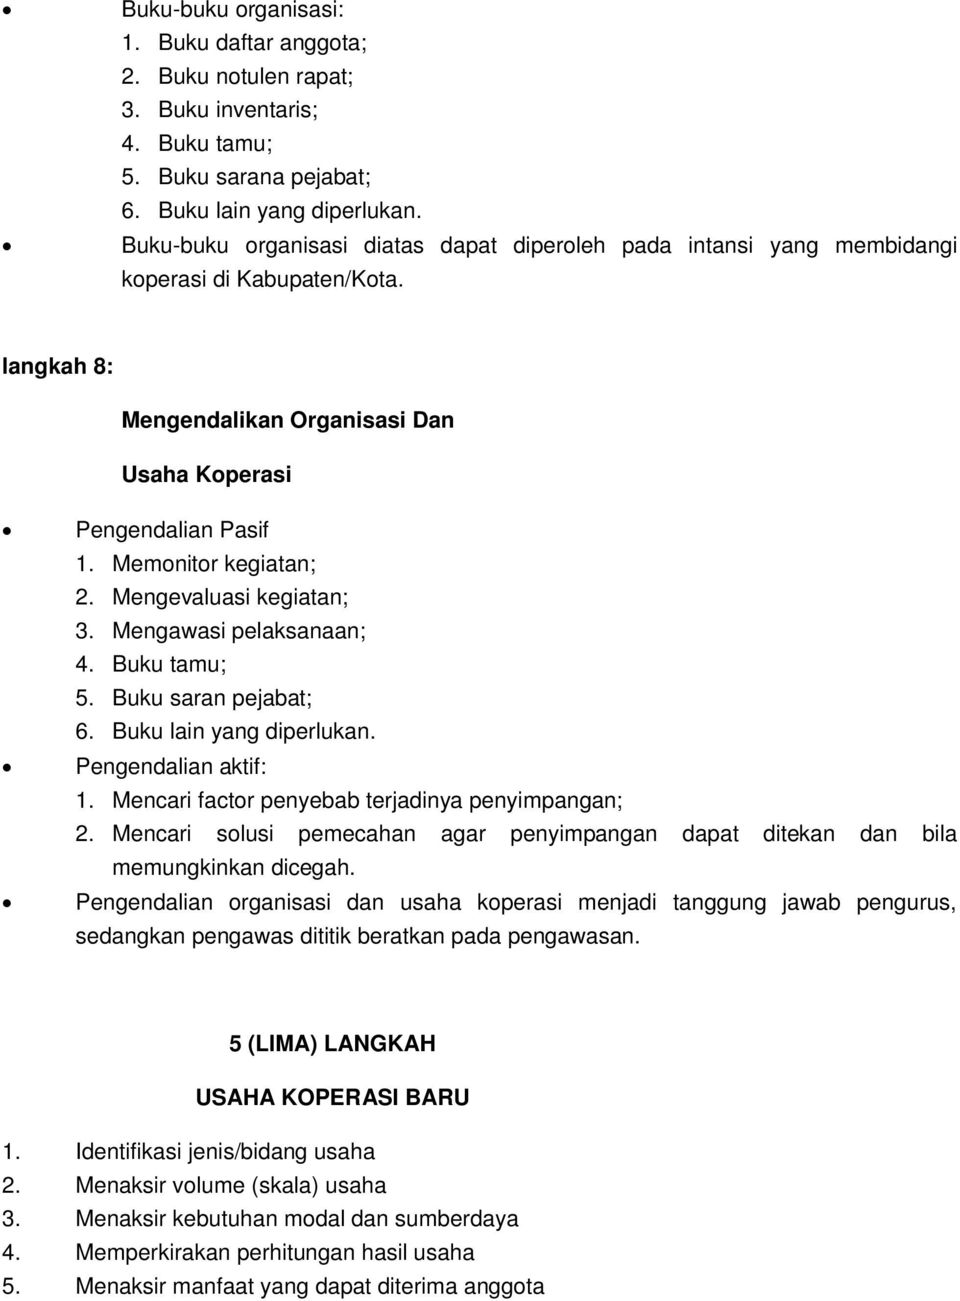 KIAT LANGKAH MENGELOLA KOPERASI BARU - PDF Free Download